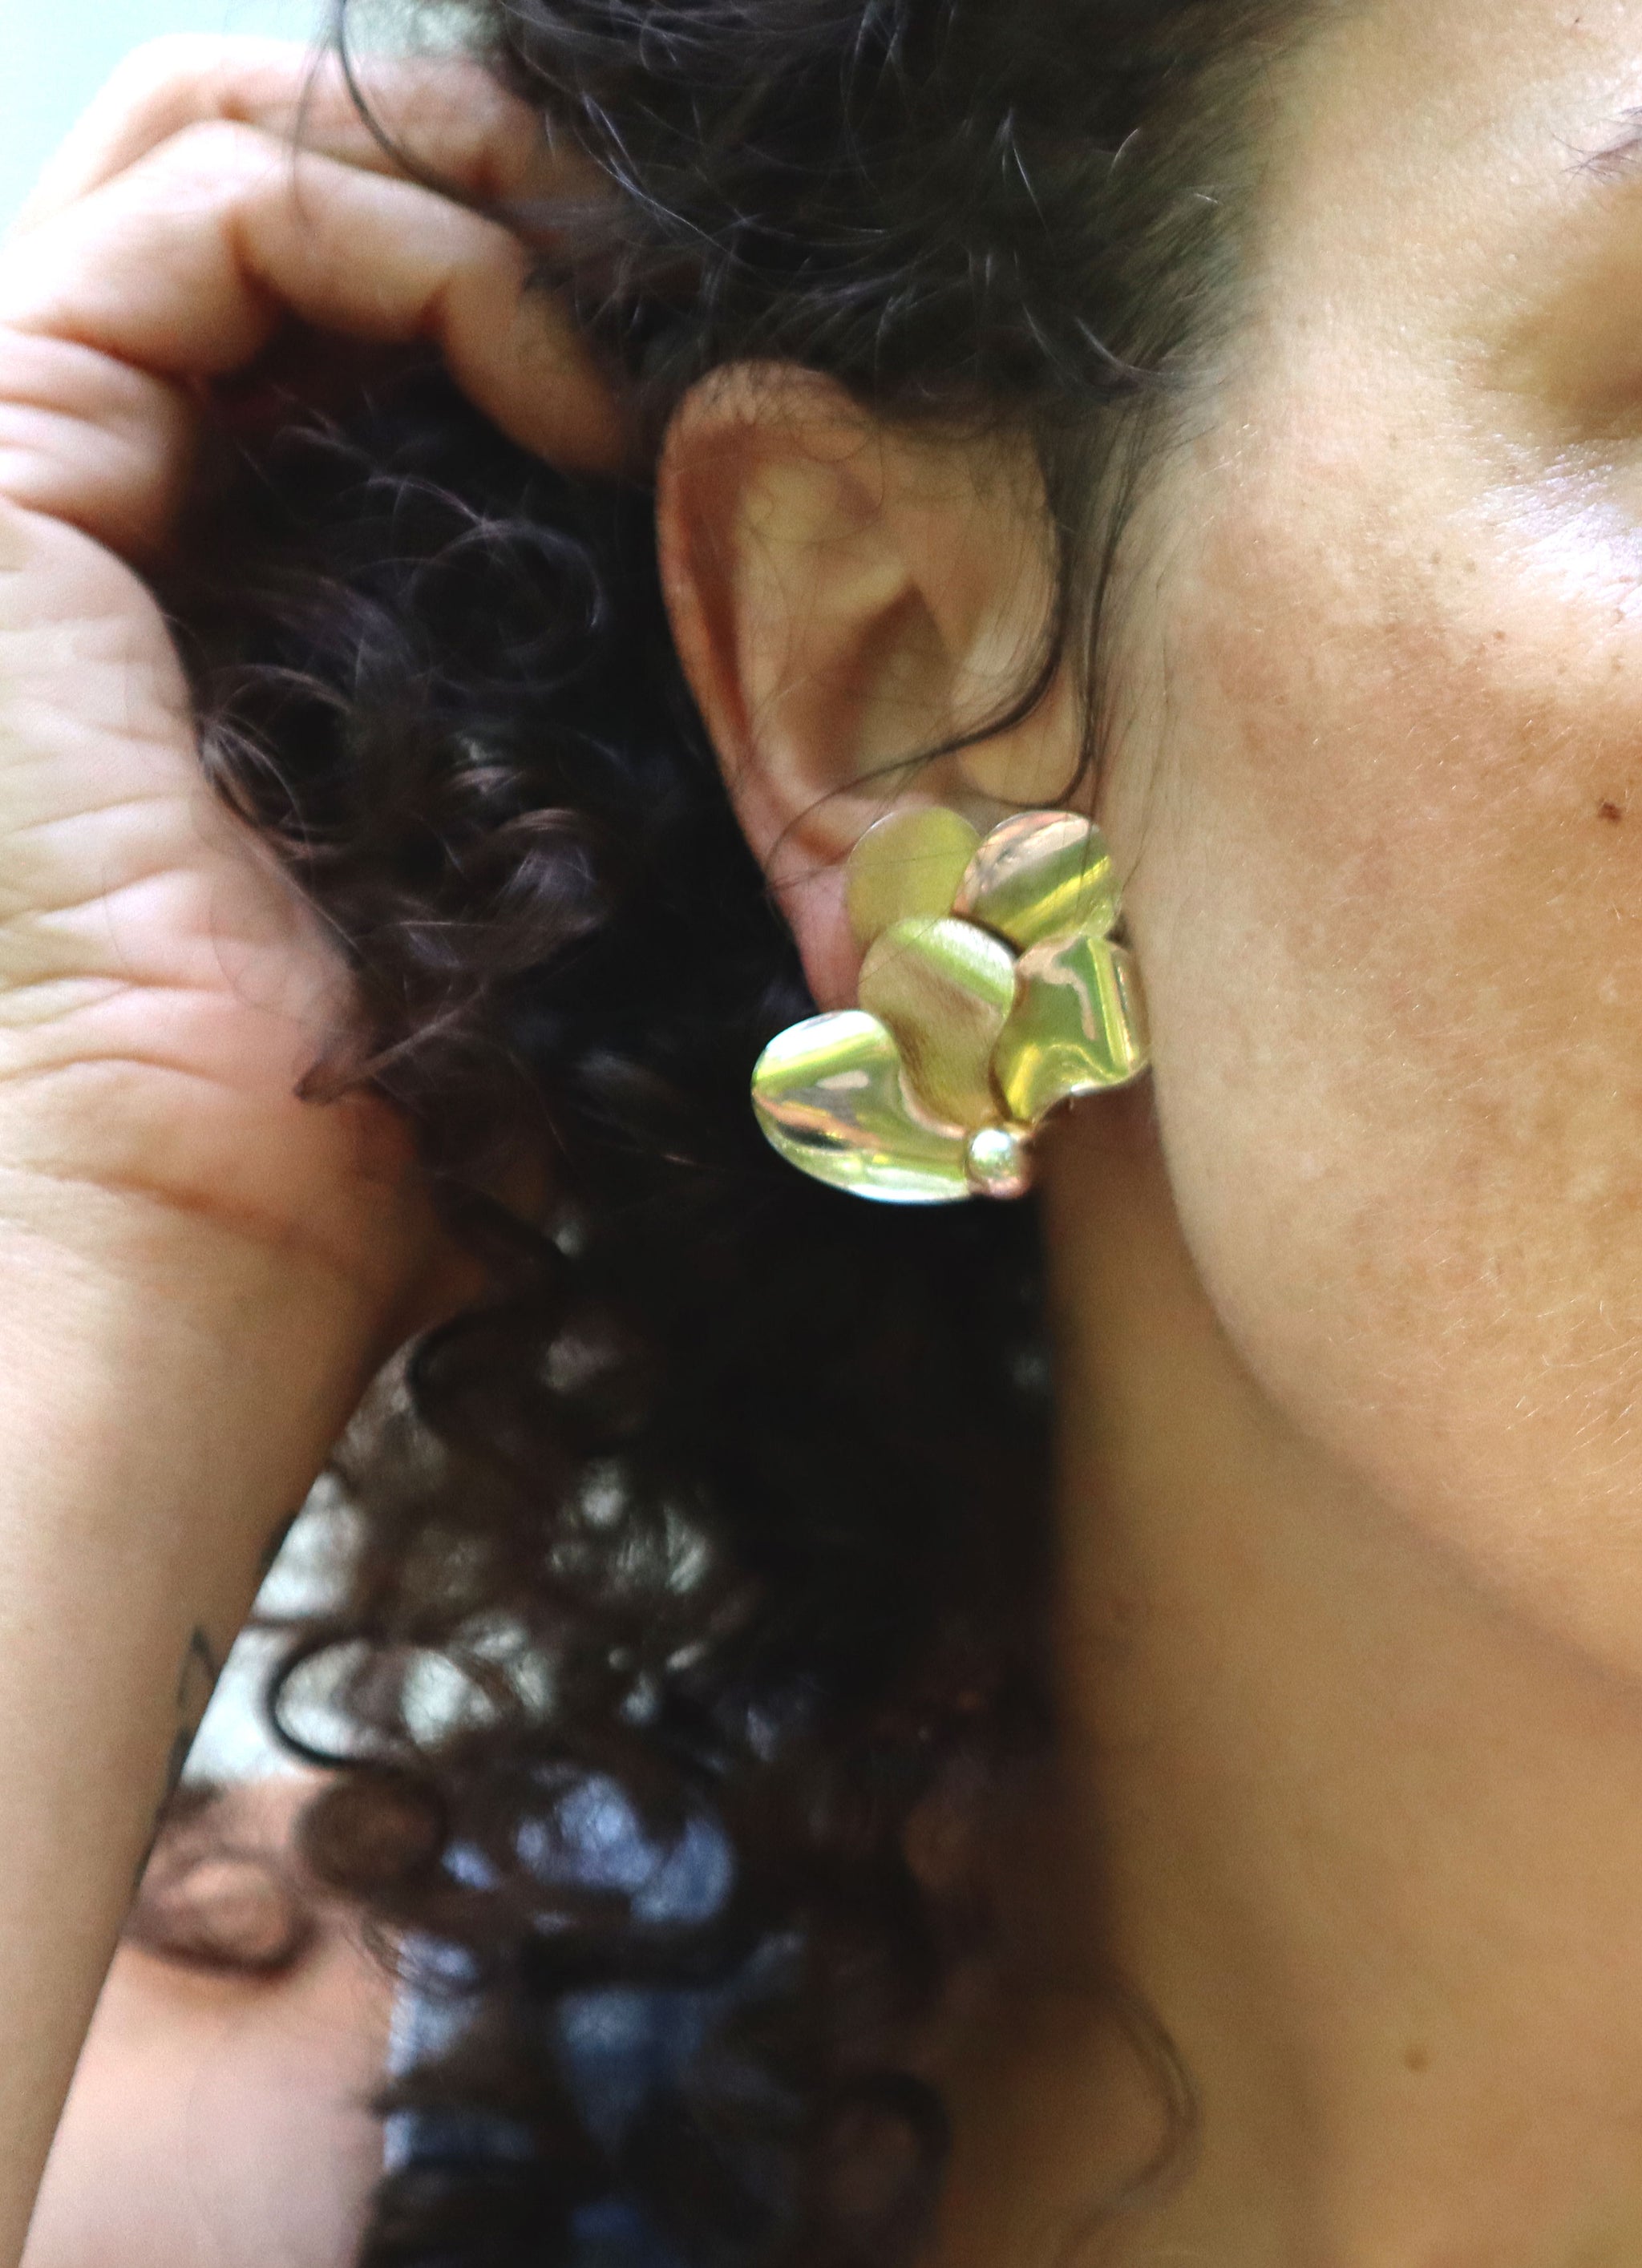 60s Mod Gold Flower Clip-on Earrings